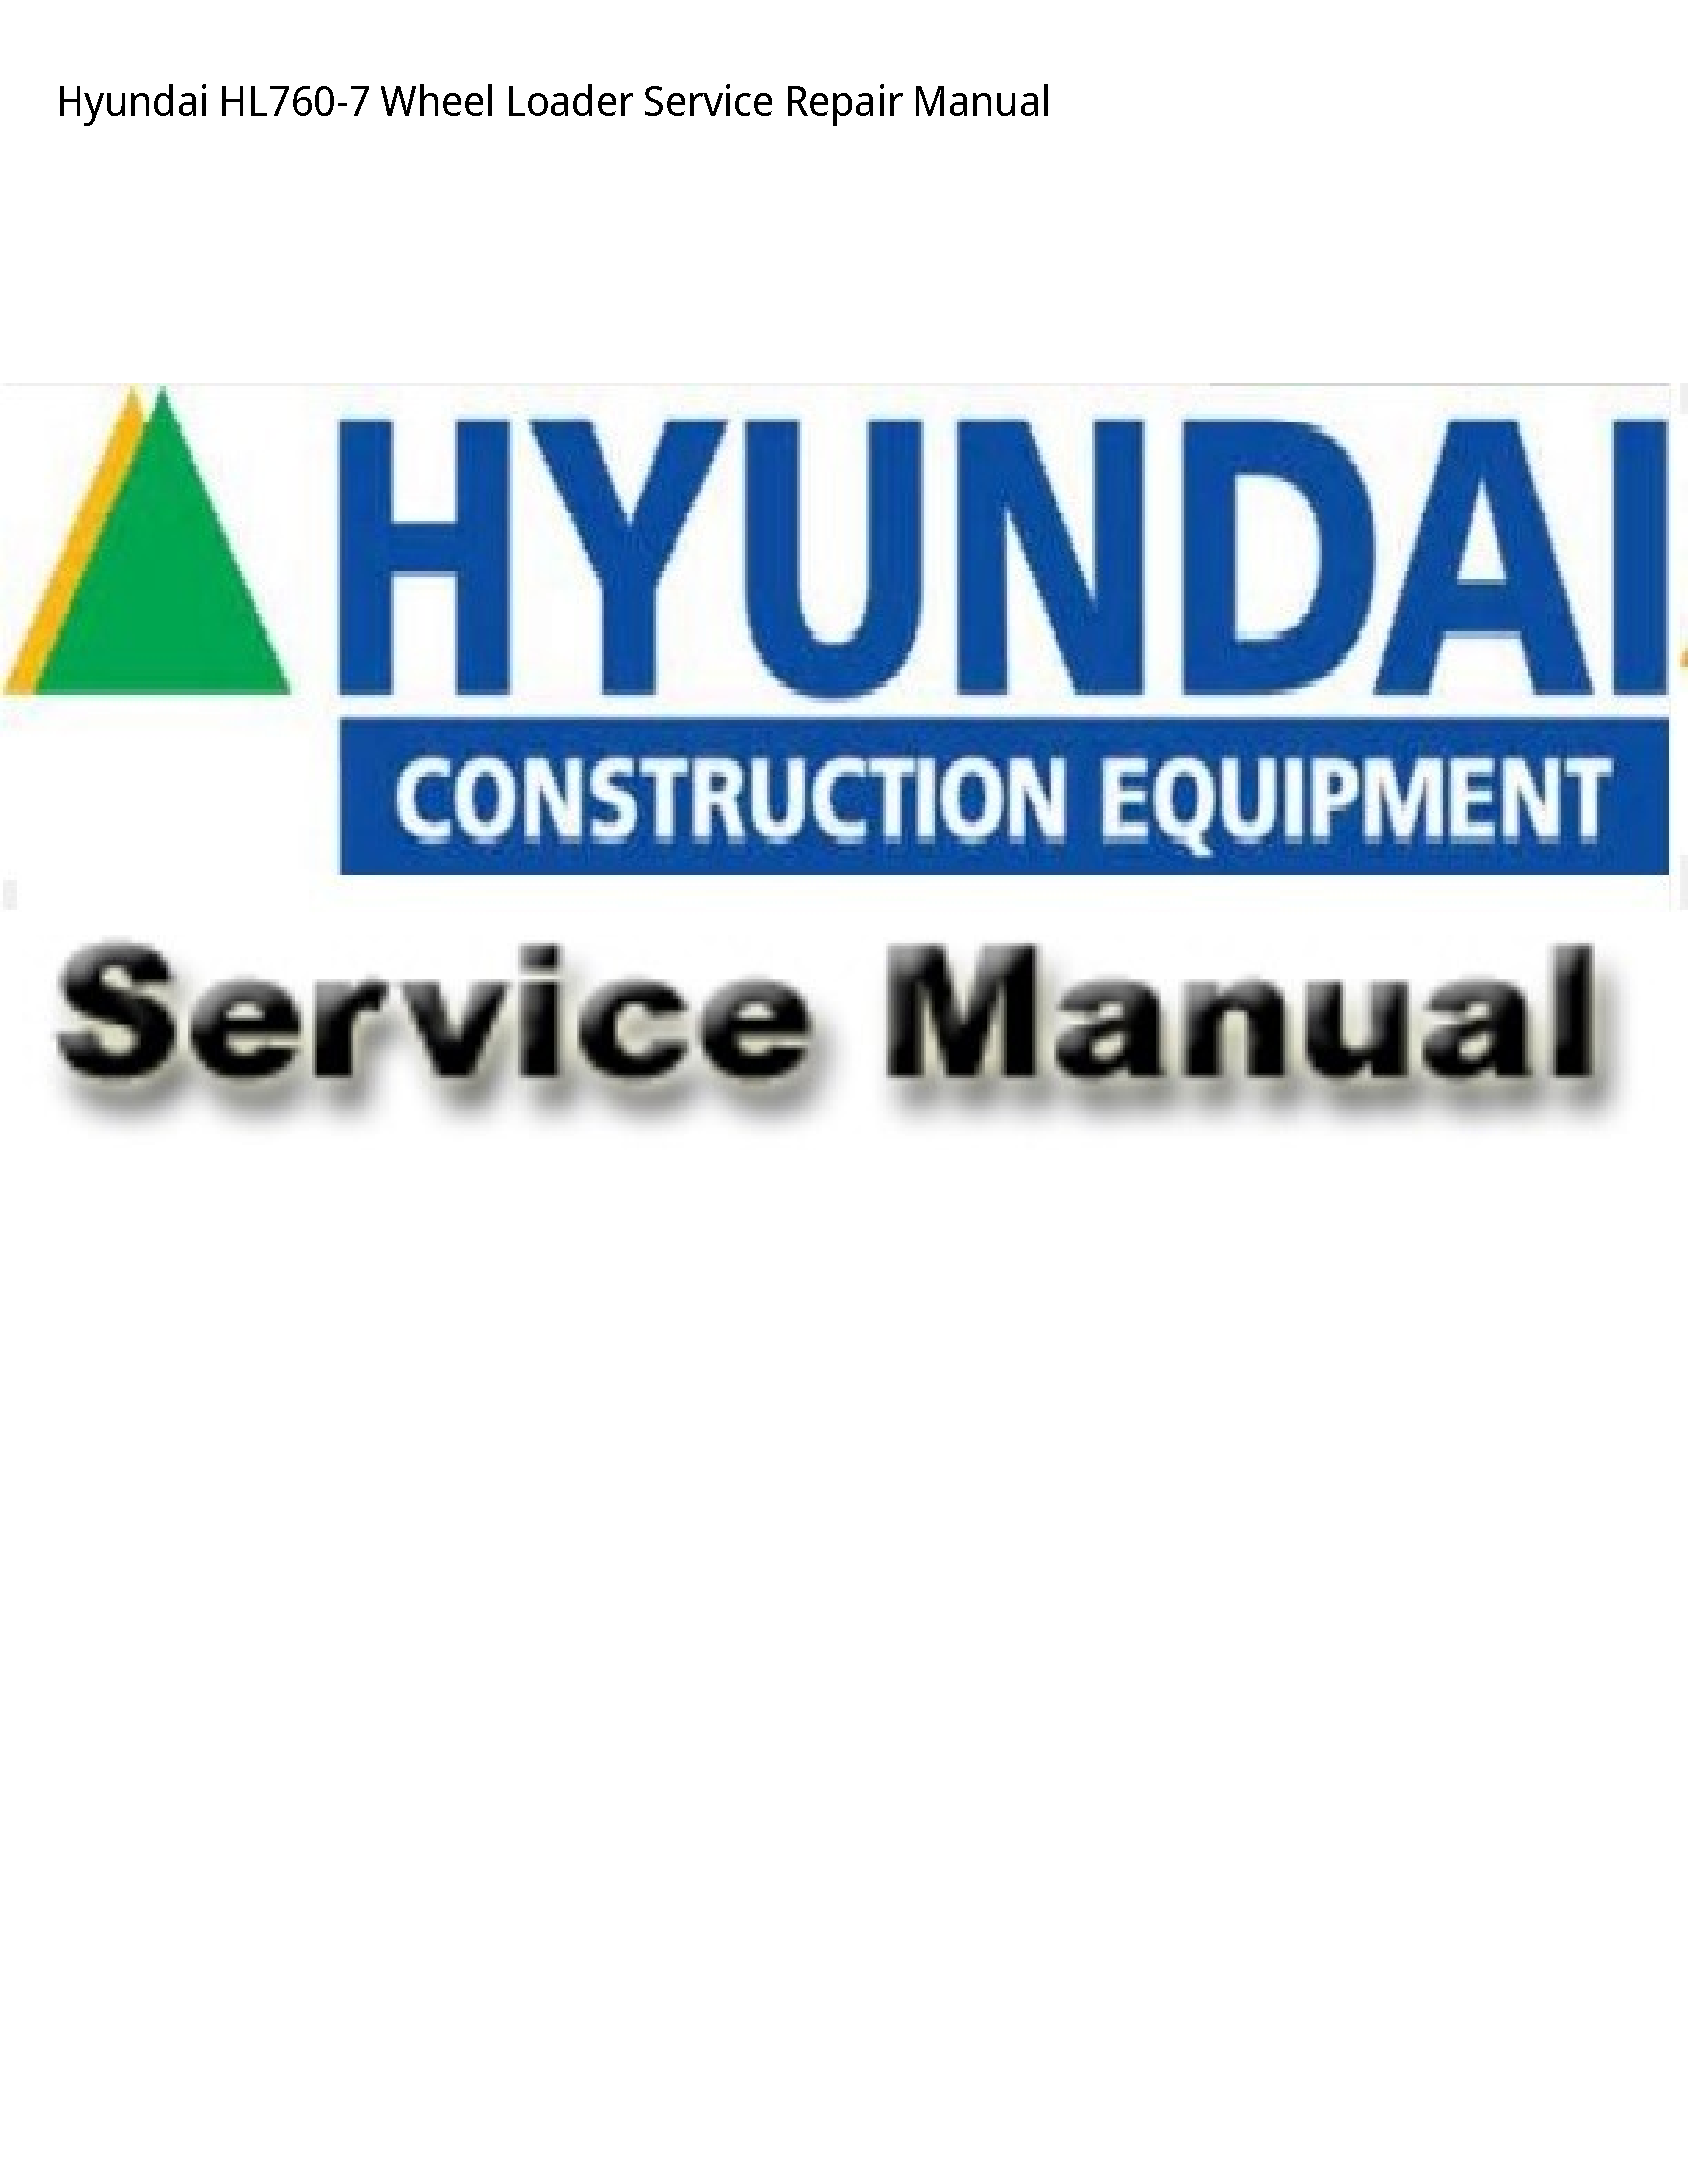 Hyundai HL760-7 Wheel Loader manual